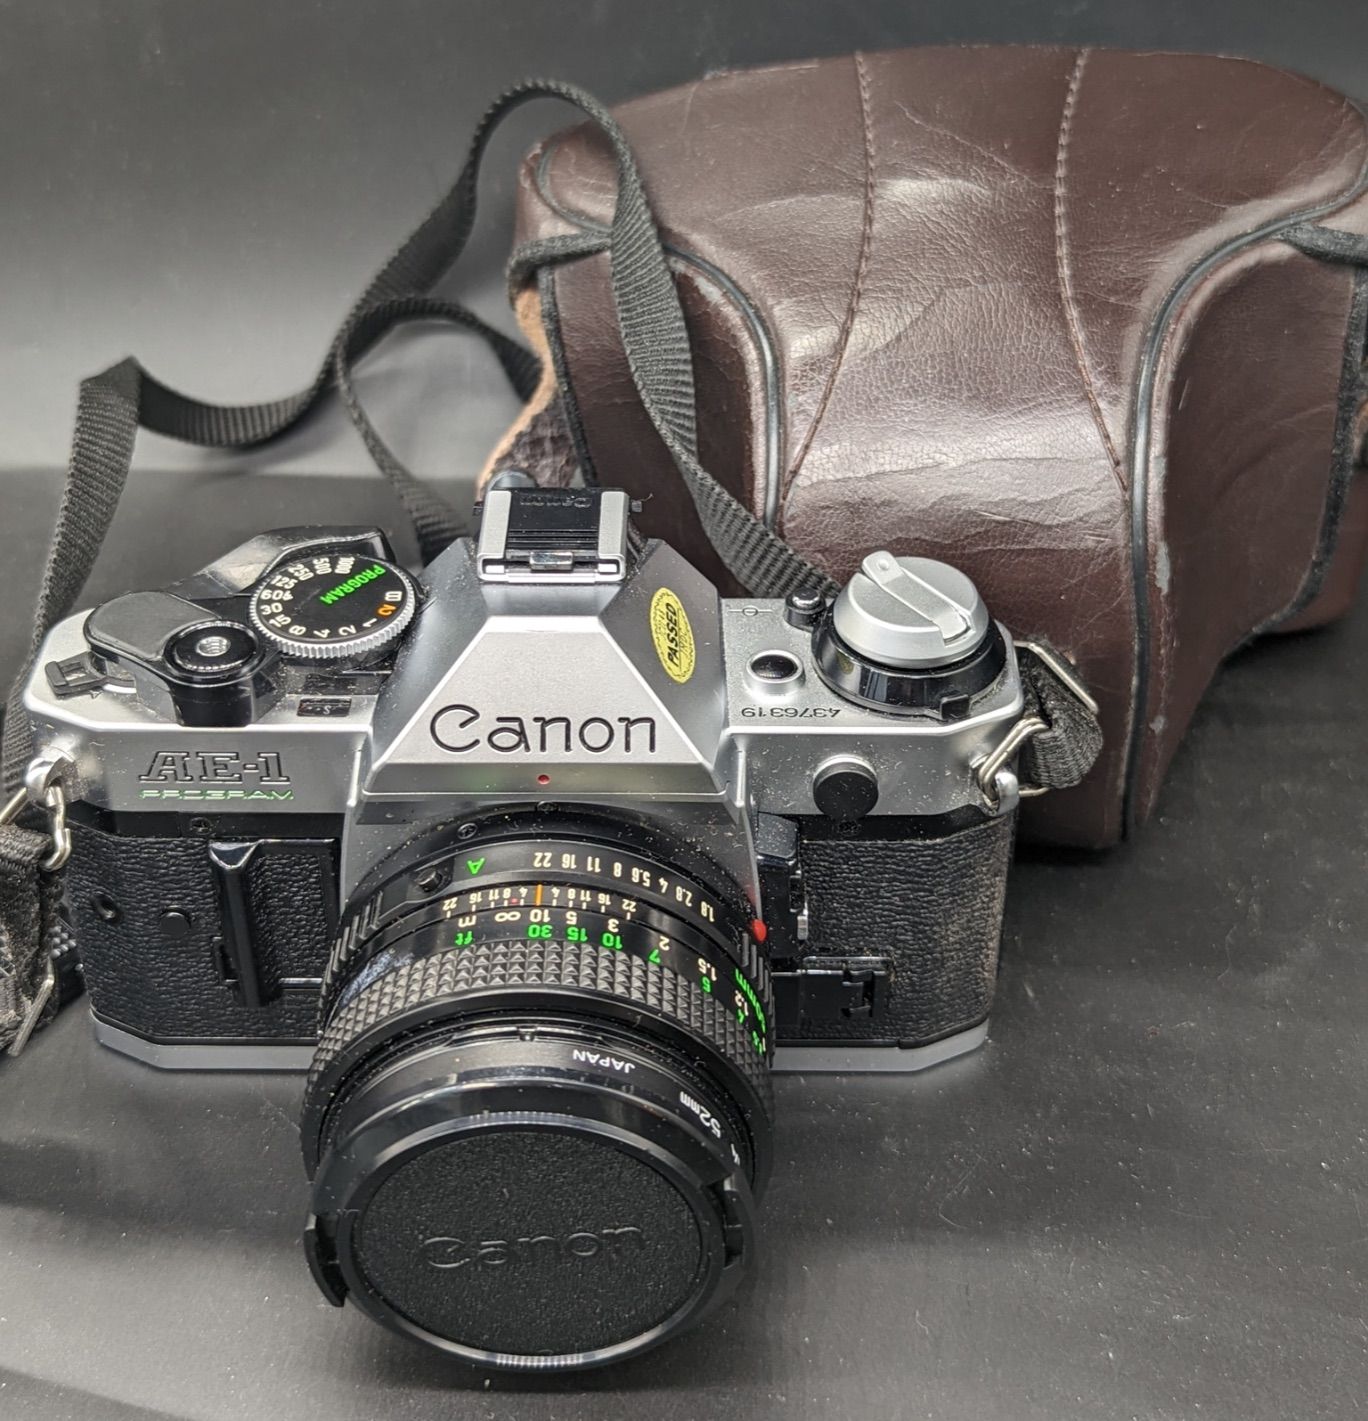 CANON Una cámara Canon AE-1, un objetivo de 50mm